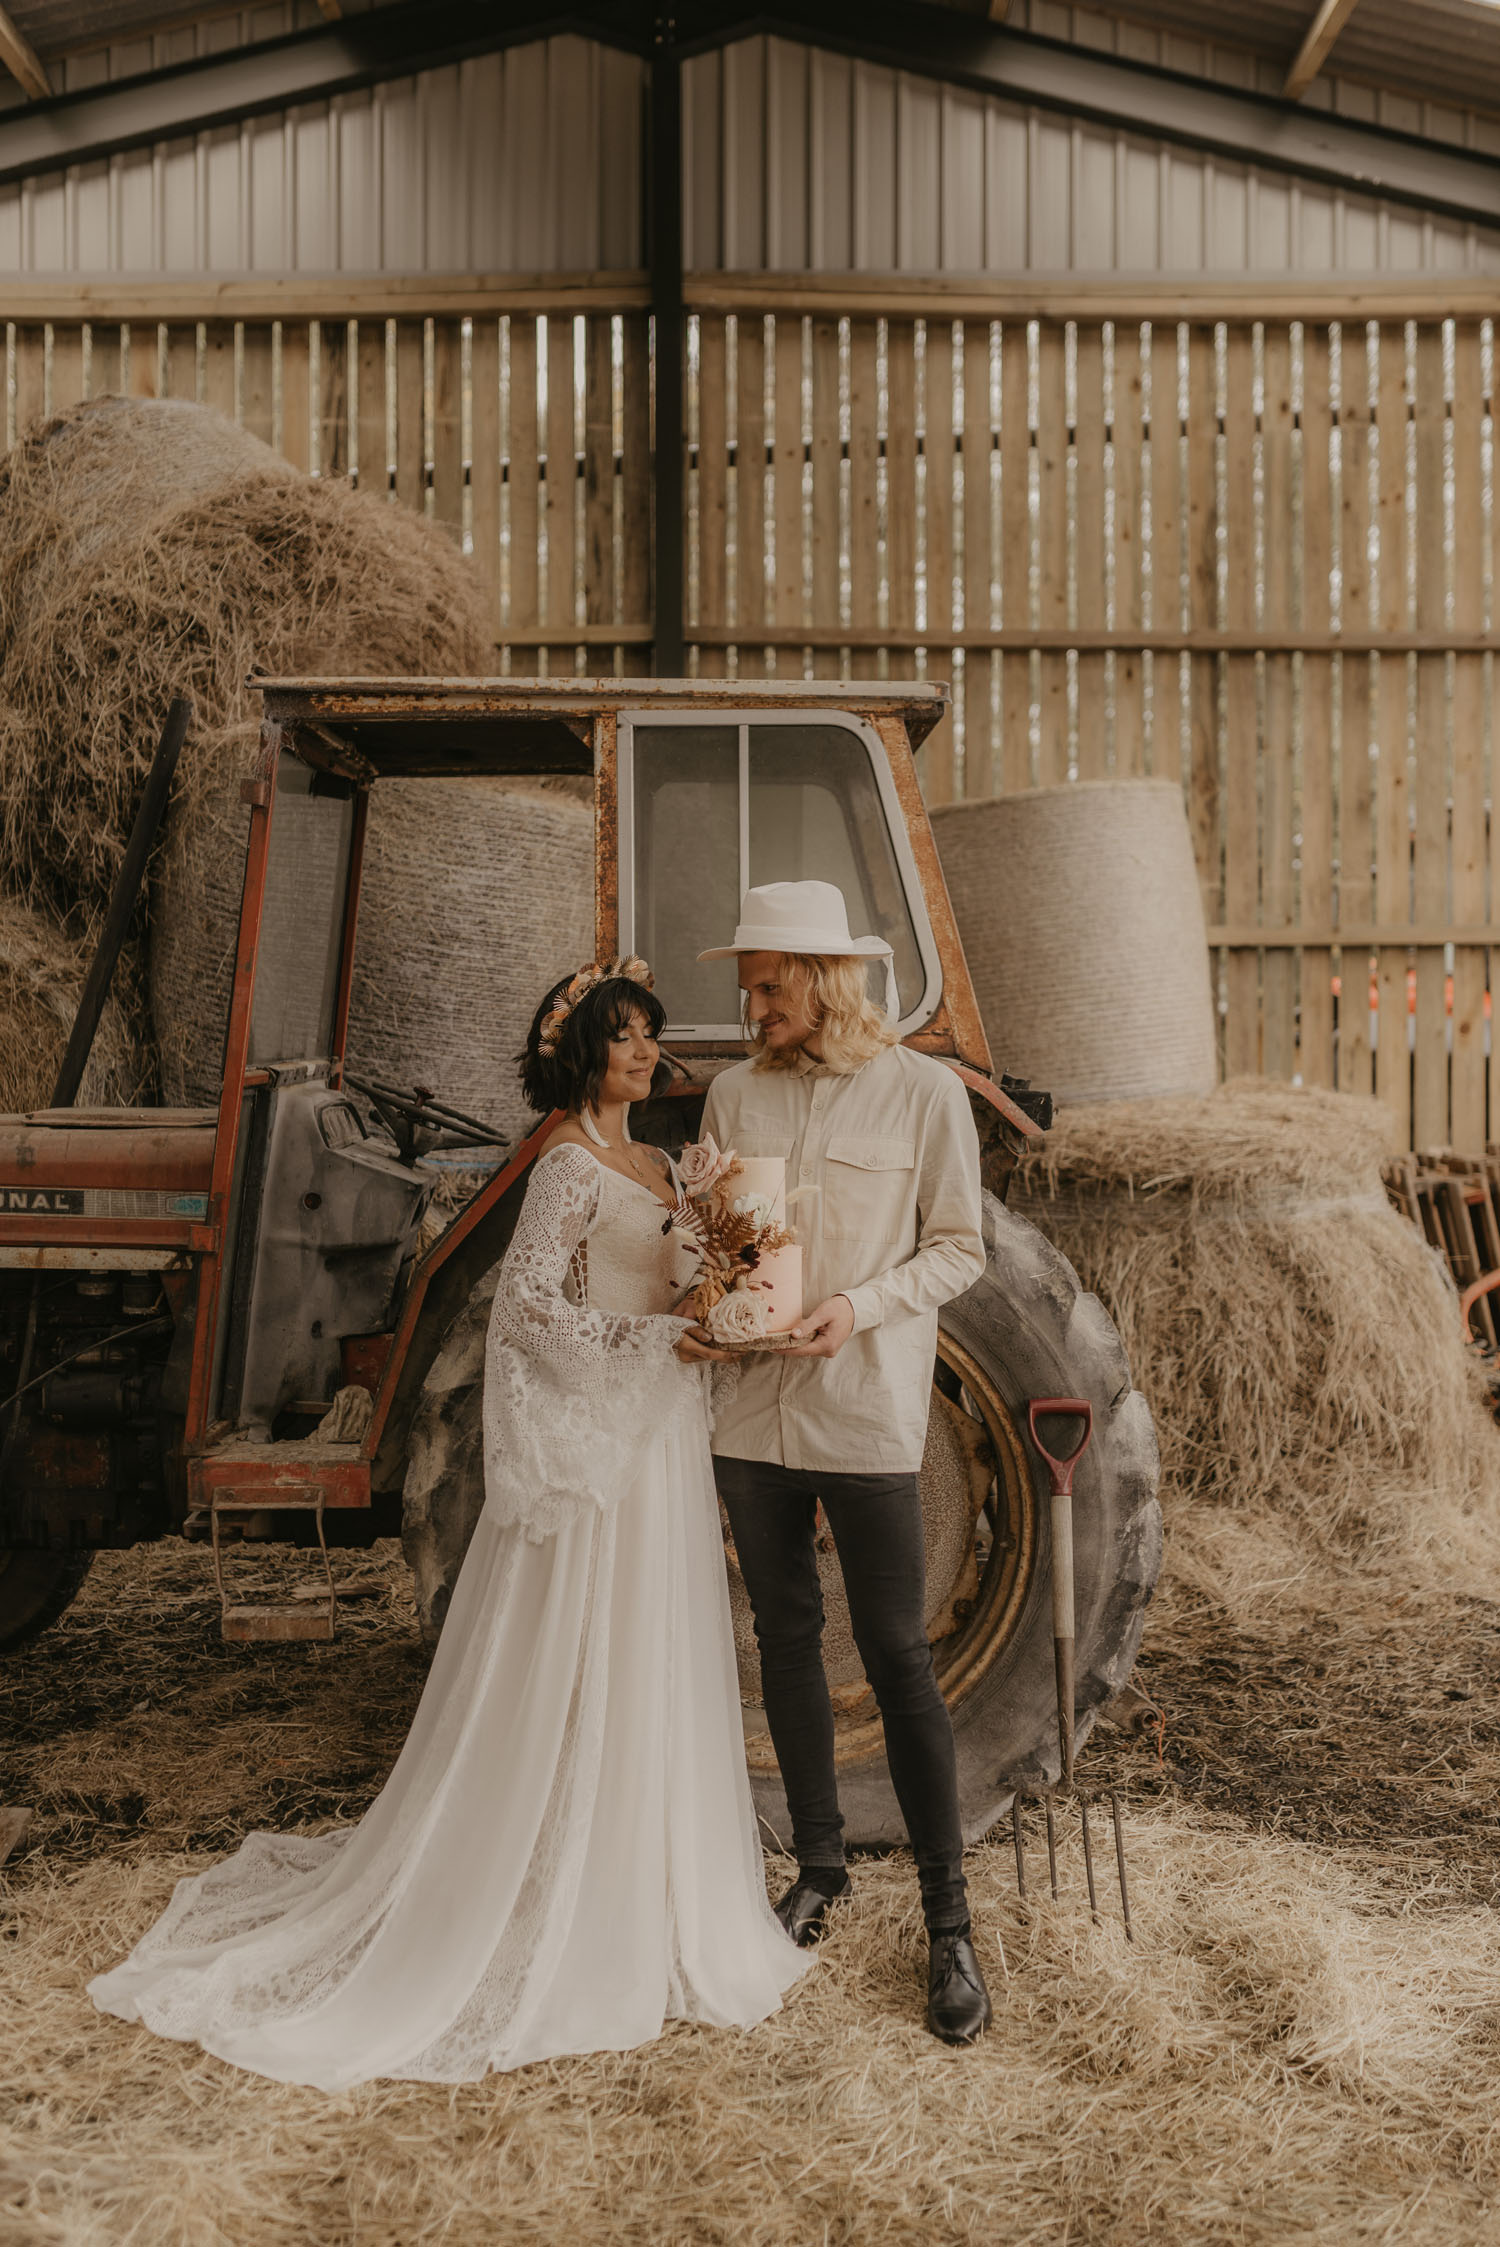 Rustic Barn Wedding Inspiration